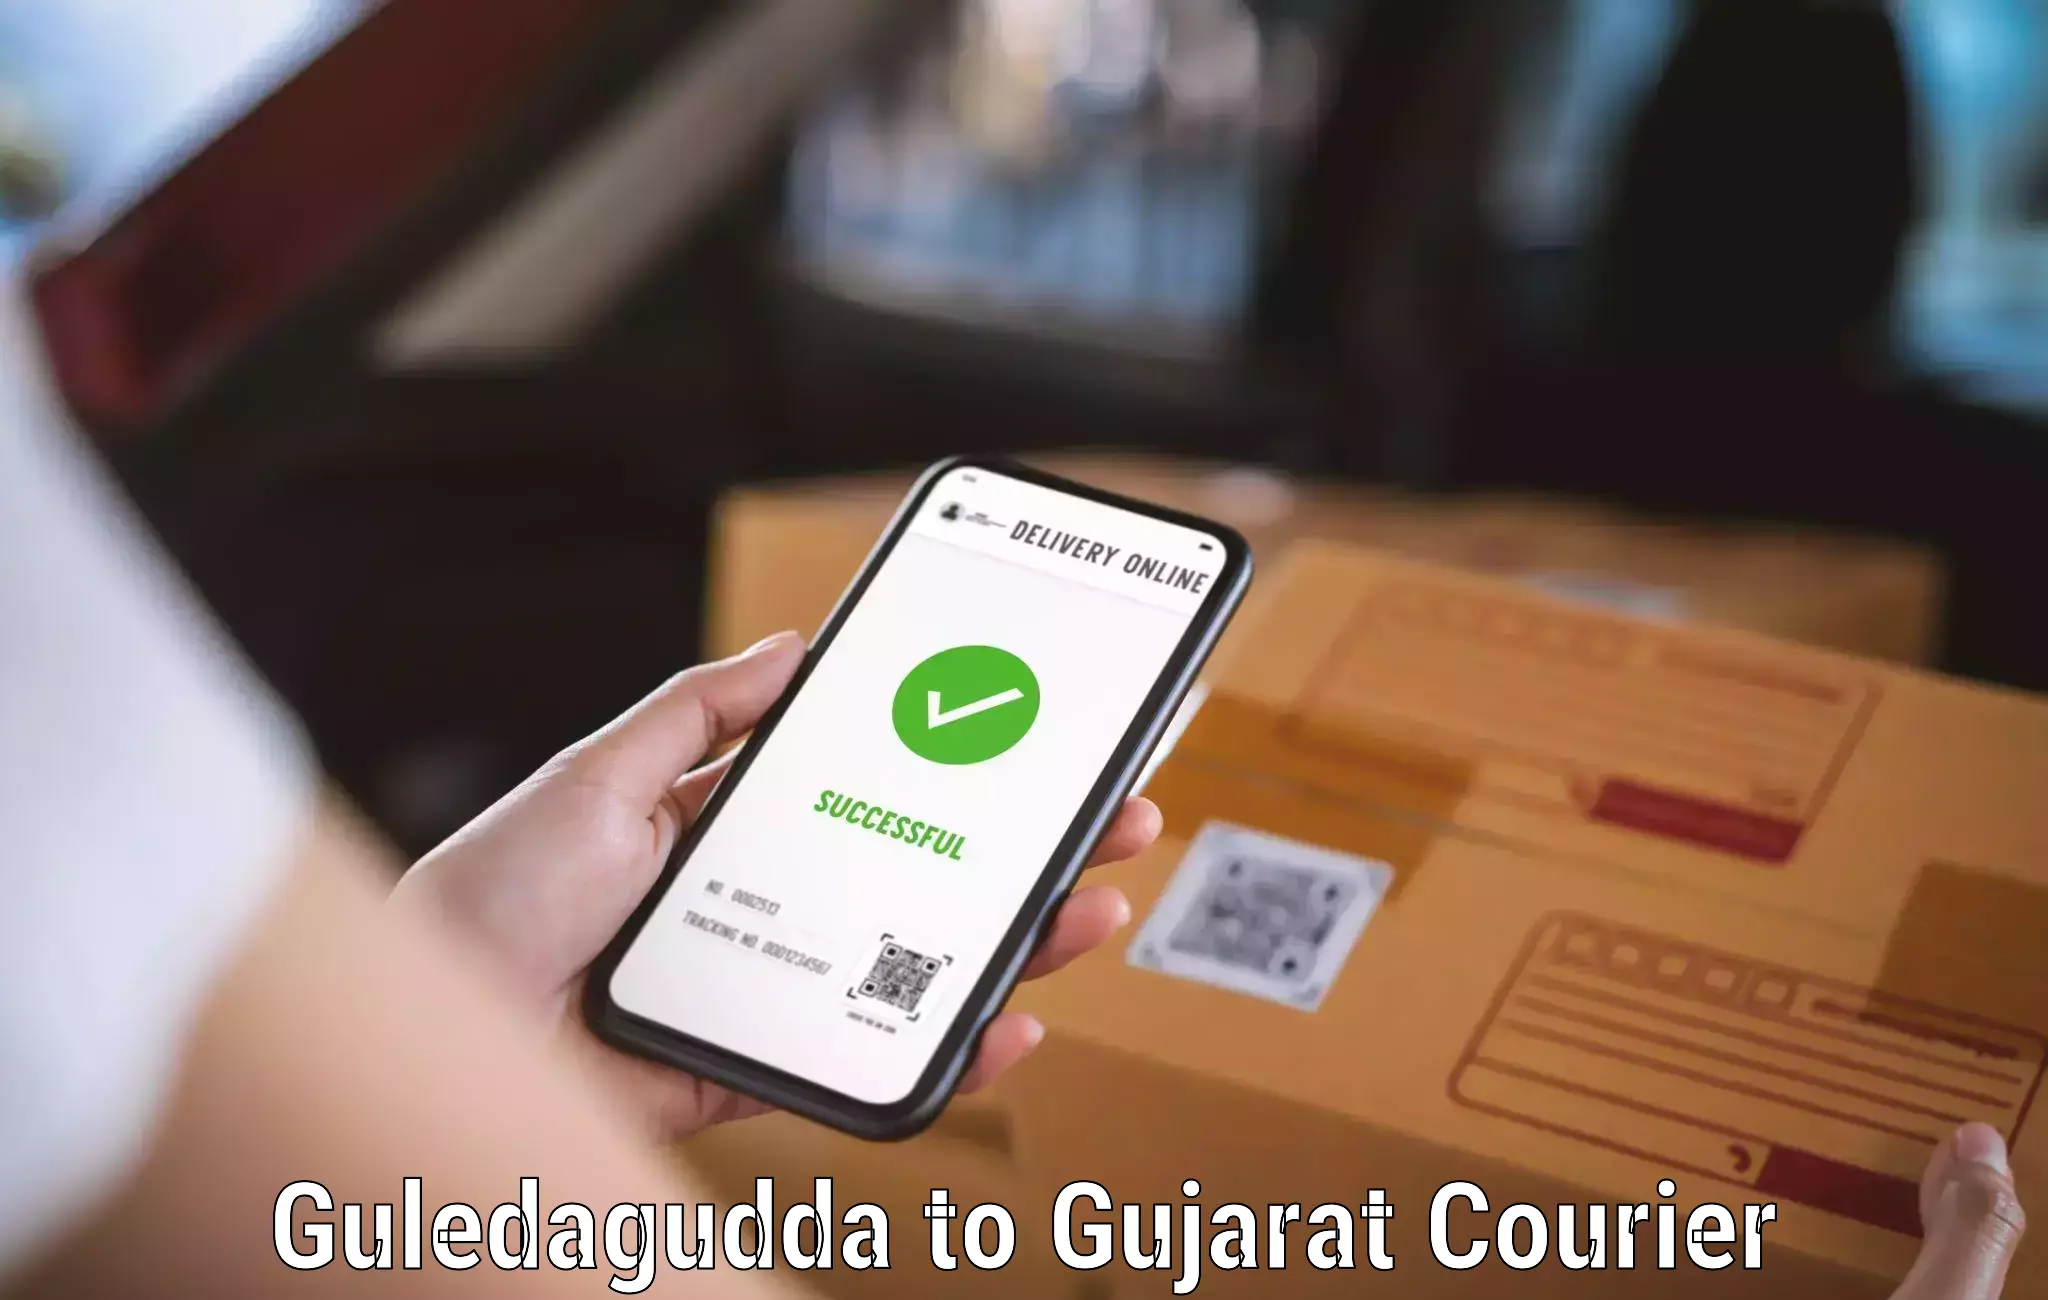 High-priority parcel service Guledagudda to Lunawada